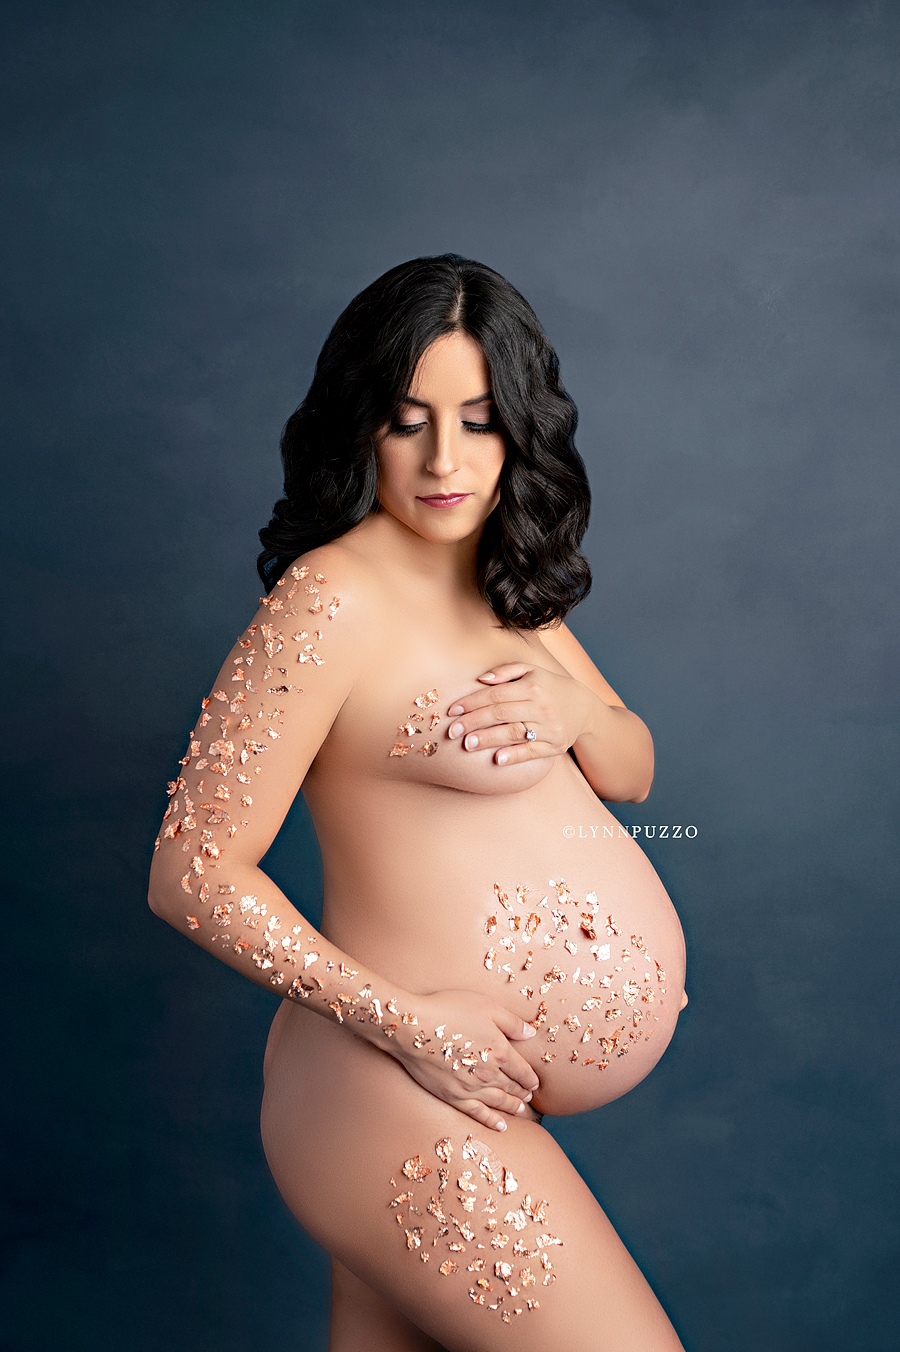 atlanta maternity photographer, Georgia maternity photographer, maternity portraits, expecting mother